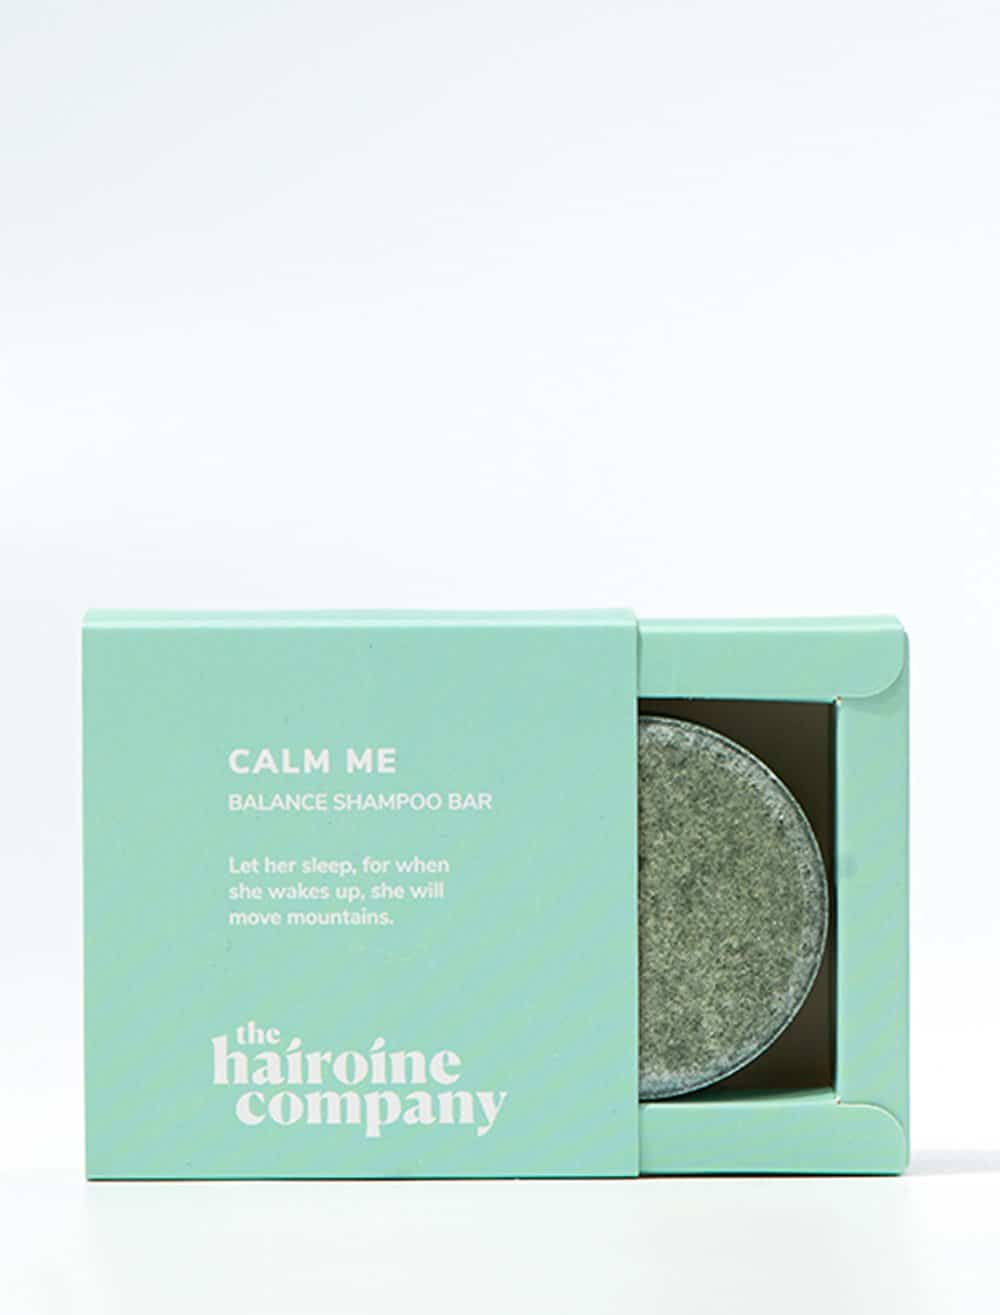 Calm Me Balance Shampoo Bar Hairoine Company Erfahrungen Review